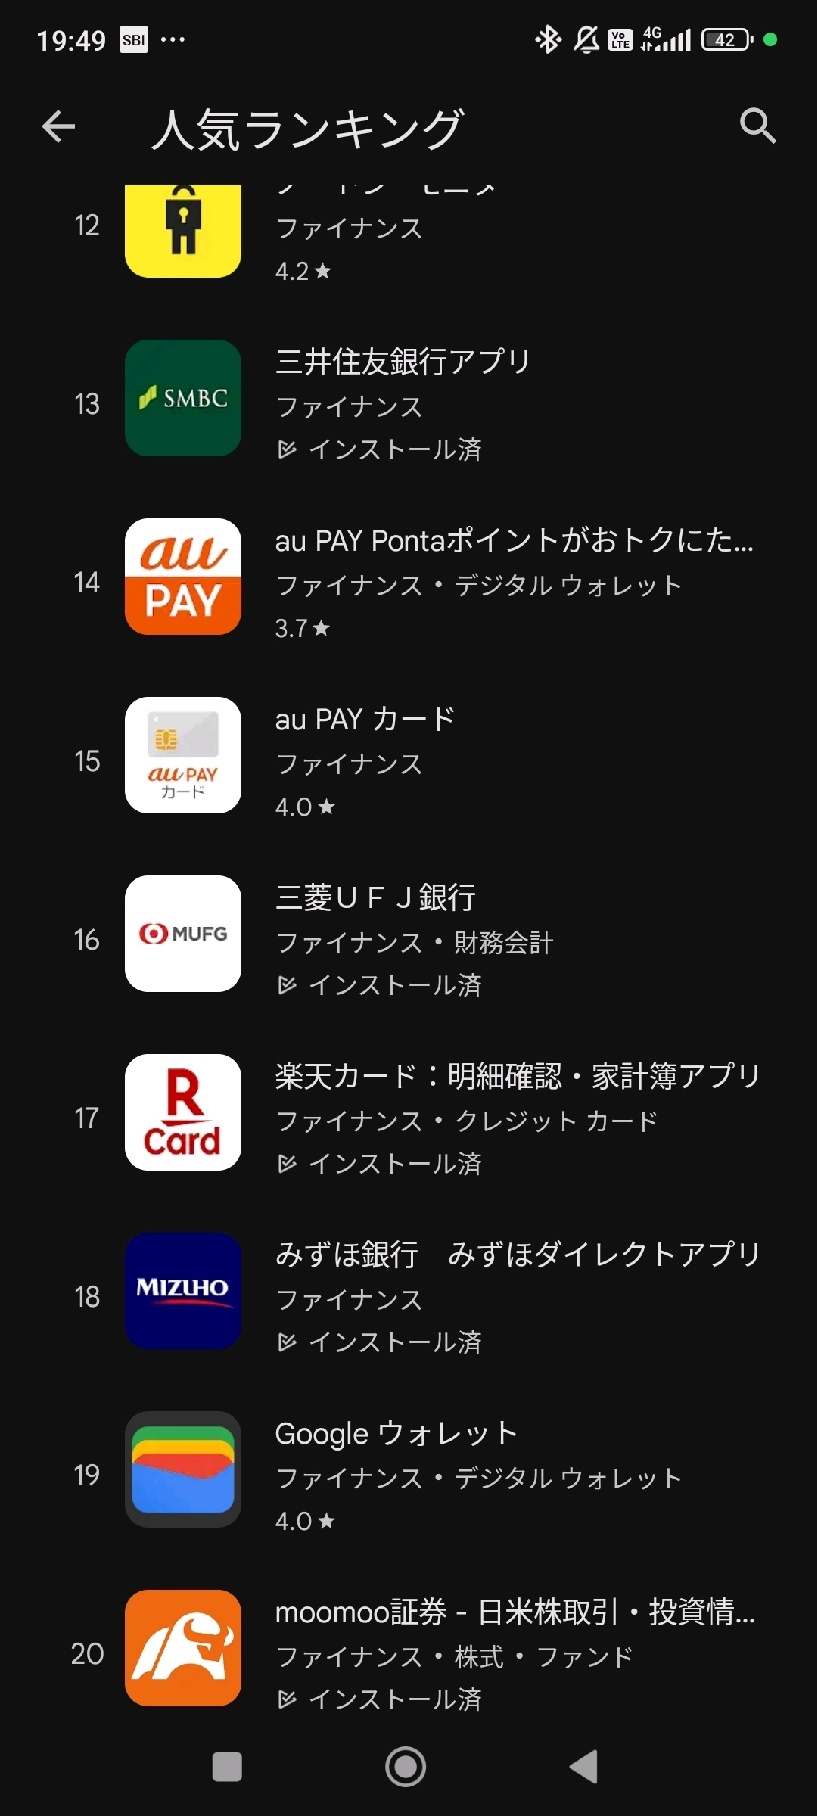 The 20th moomoo app popularity ranking is amazing